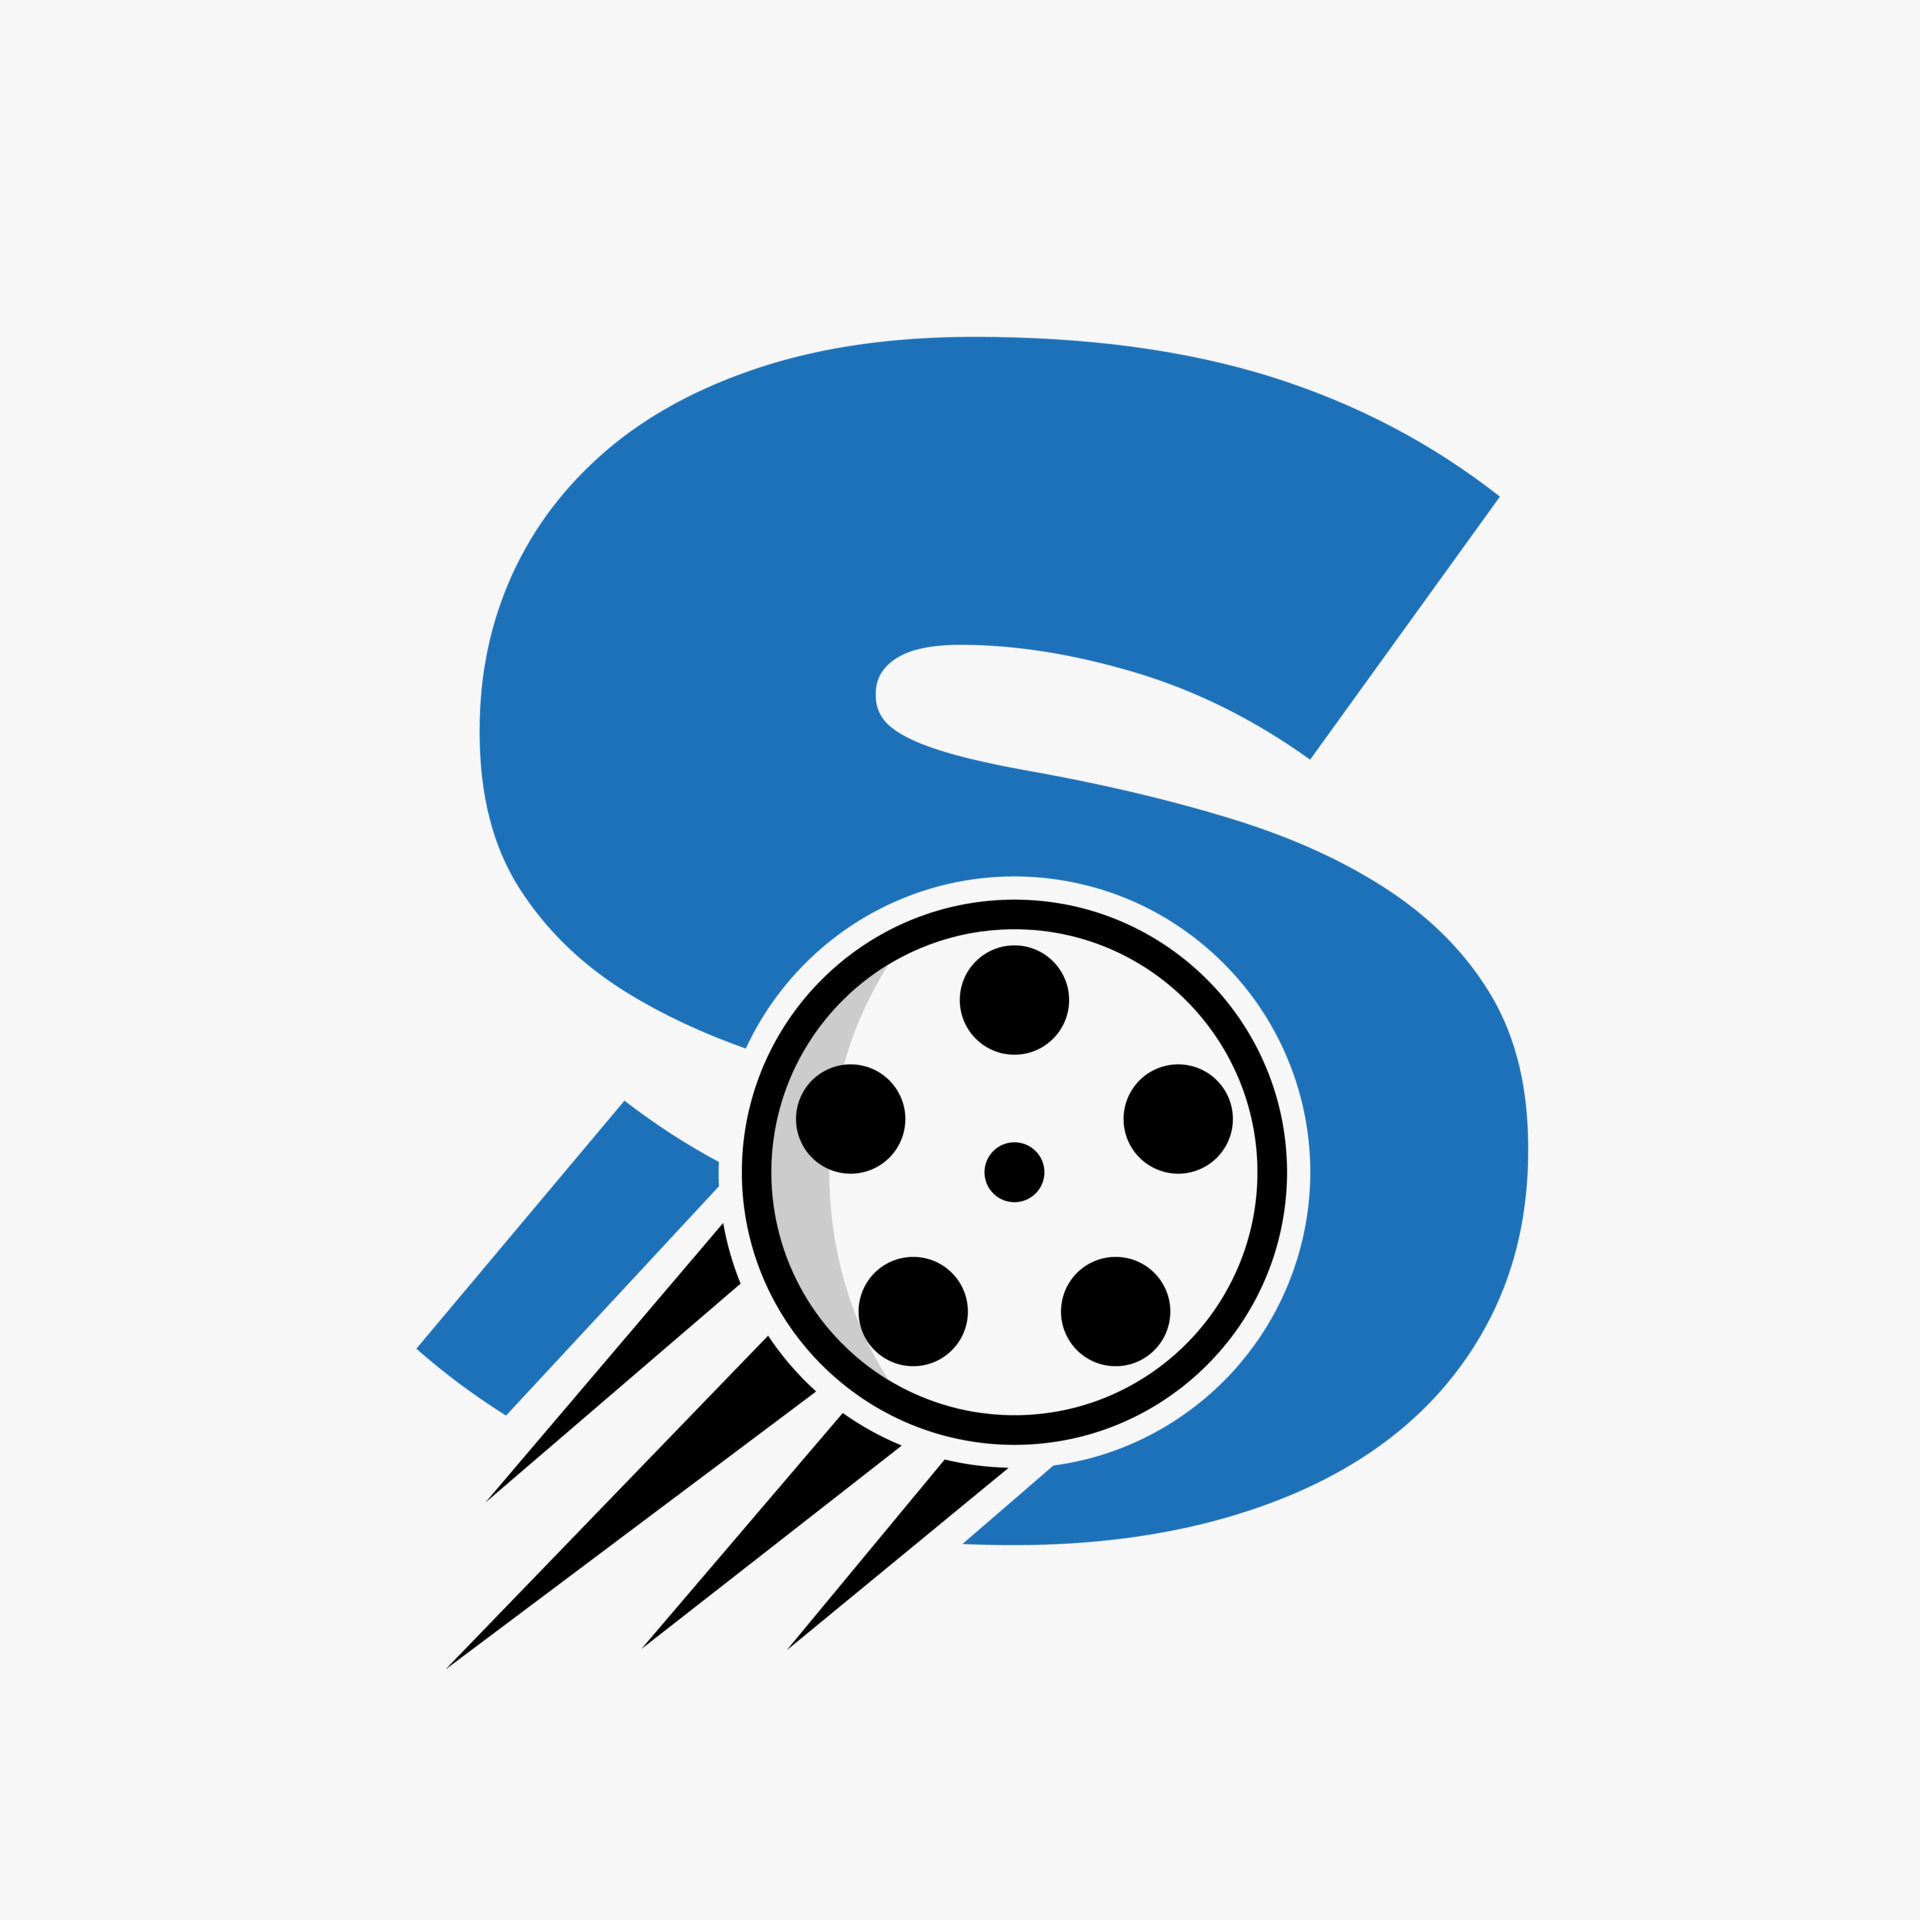 Letter S Film Logo Concept With Film Reel For Media Sign, Movie